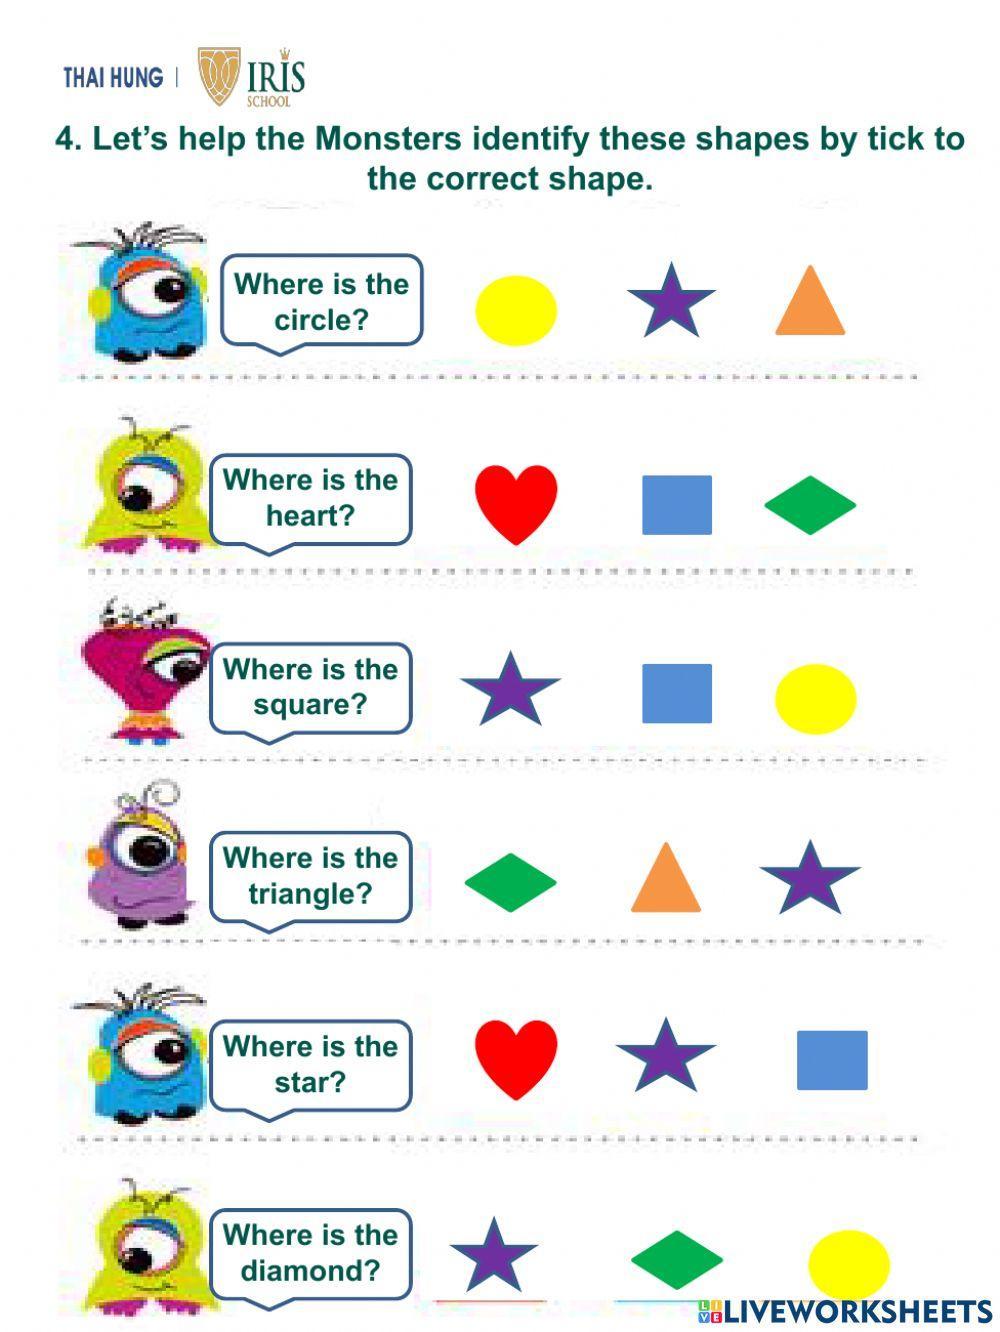 Worksheet about Shapes for Kids